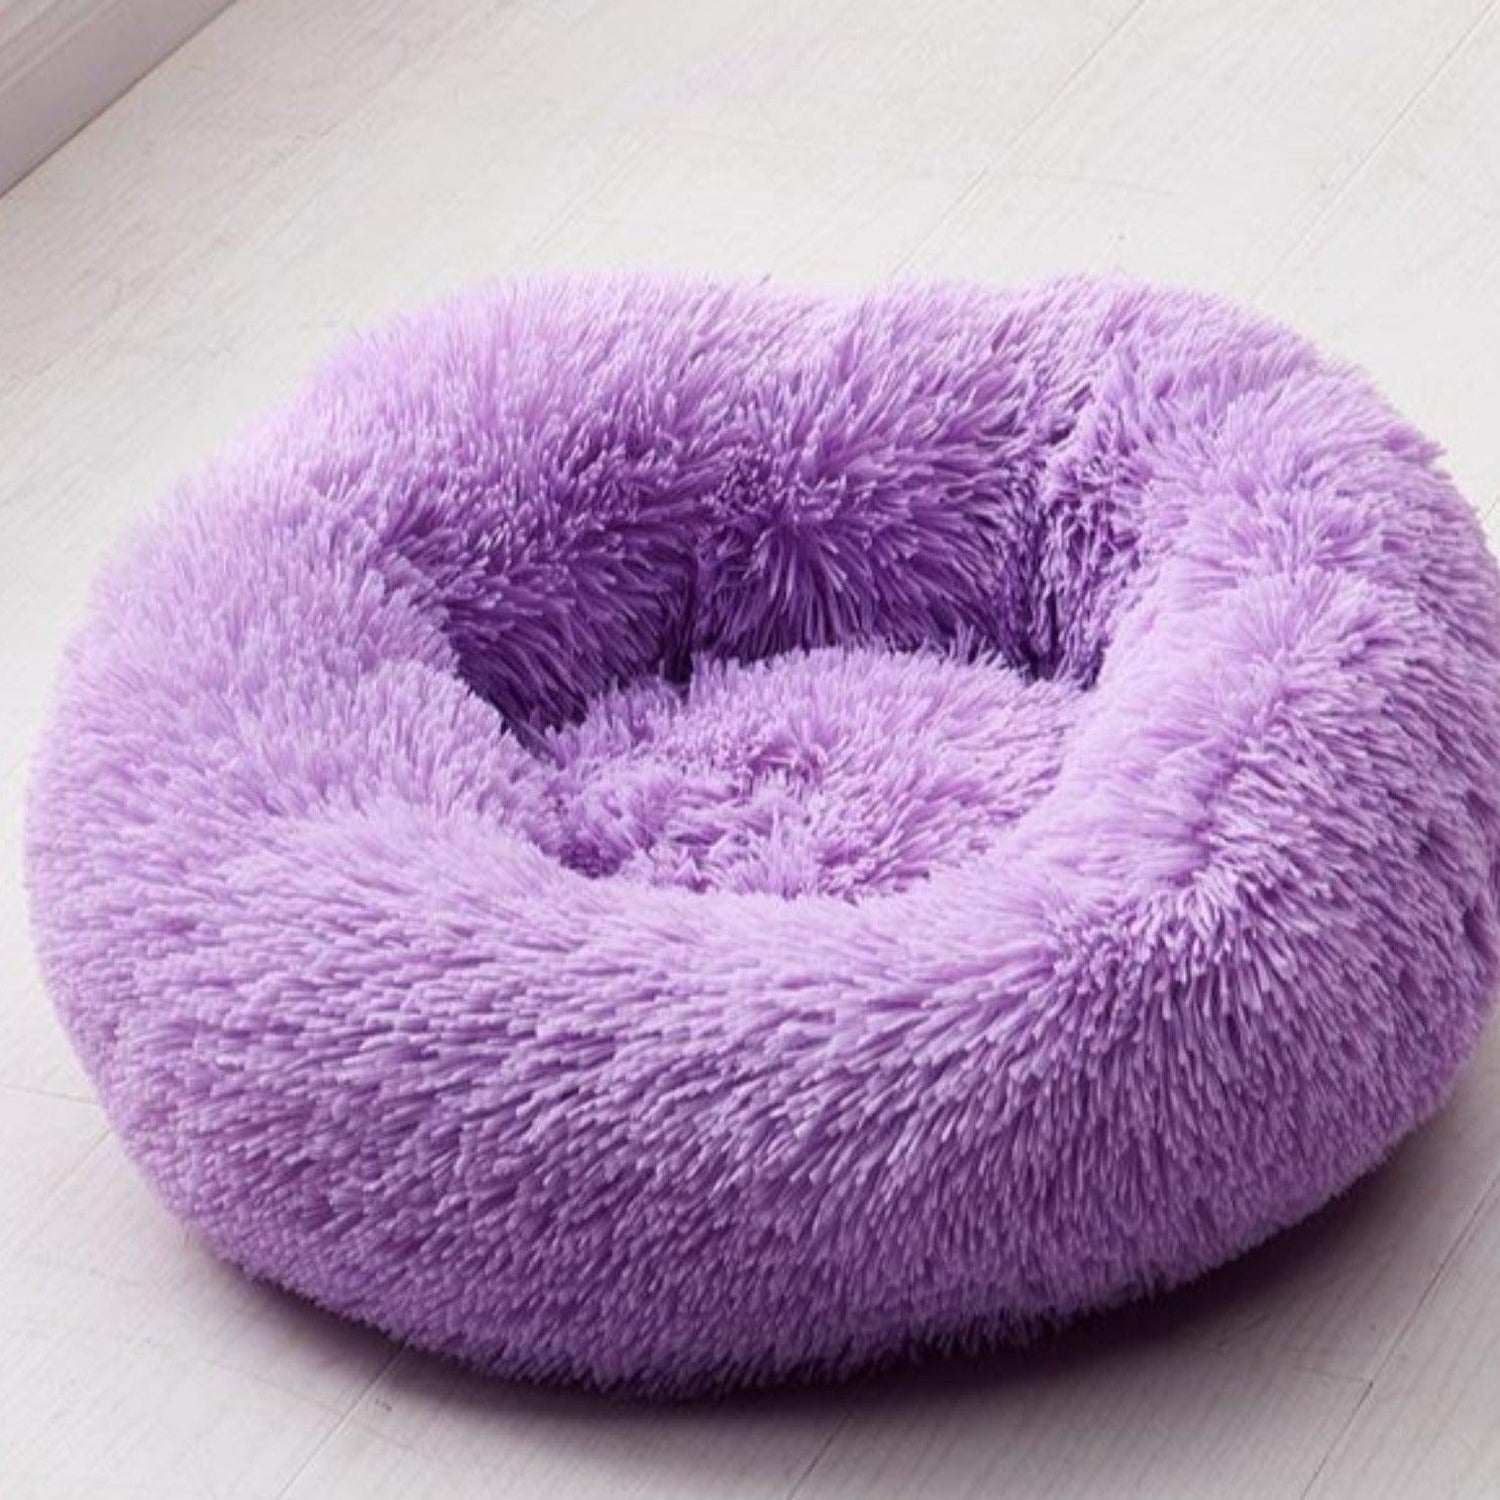 Luxury Soft Donut Dog Bed Cushion Superior Comfort - Purple